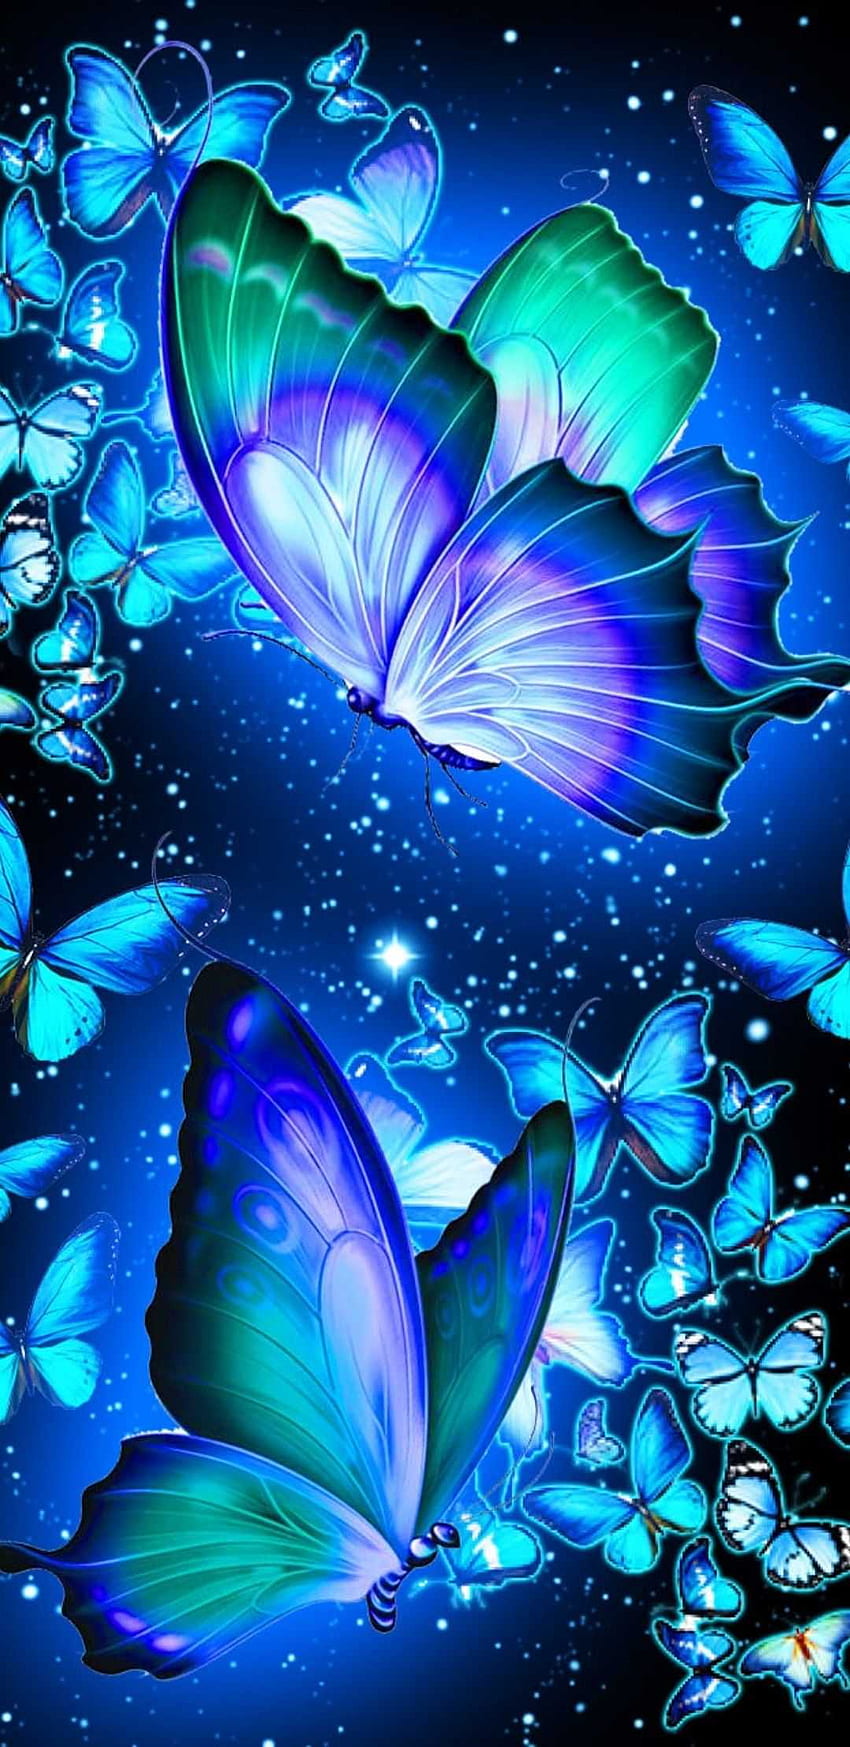 Kupu-kupu - Luar biasa wallpaper ponsel HD